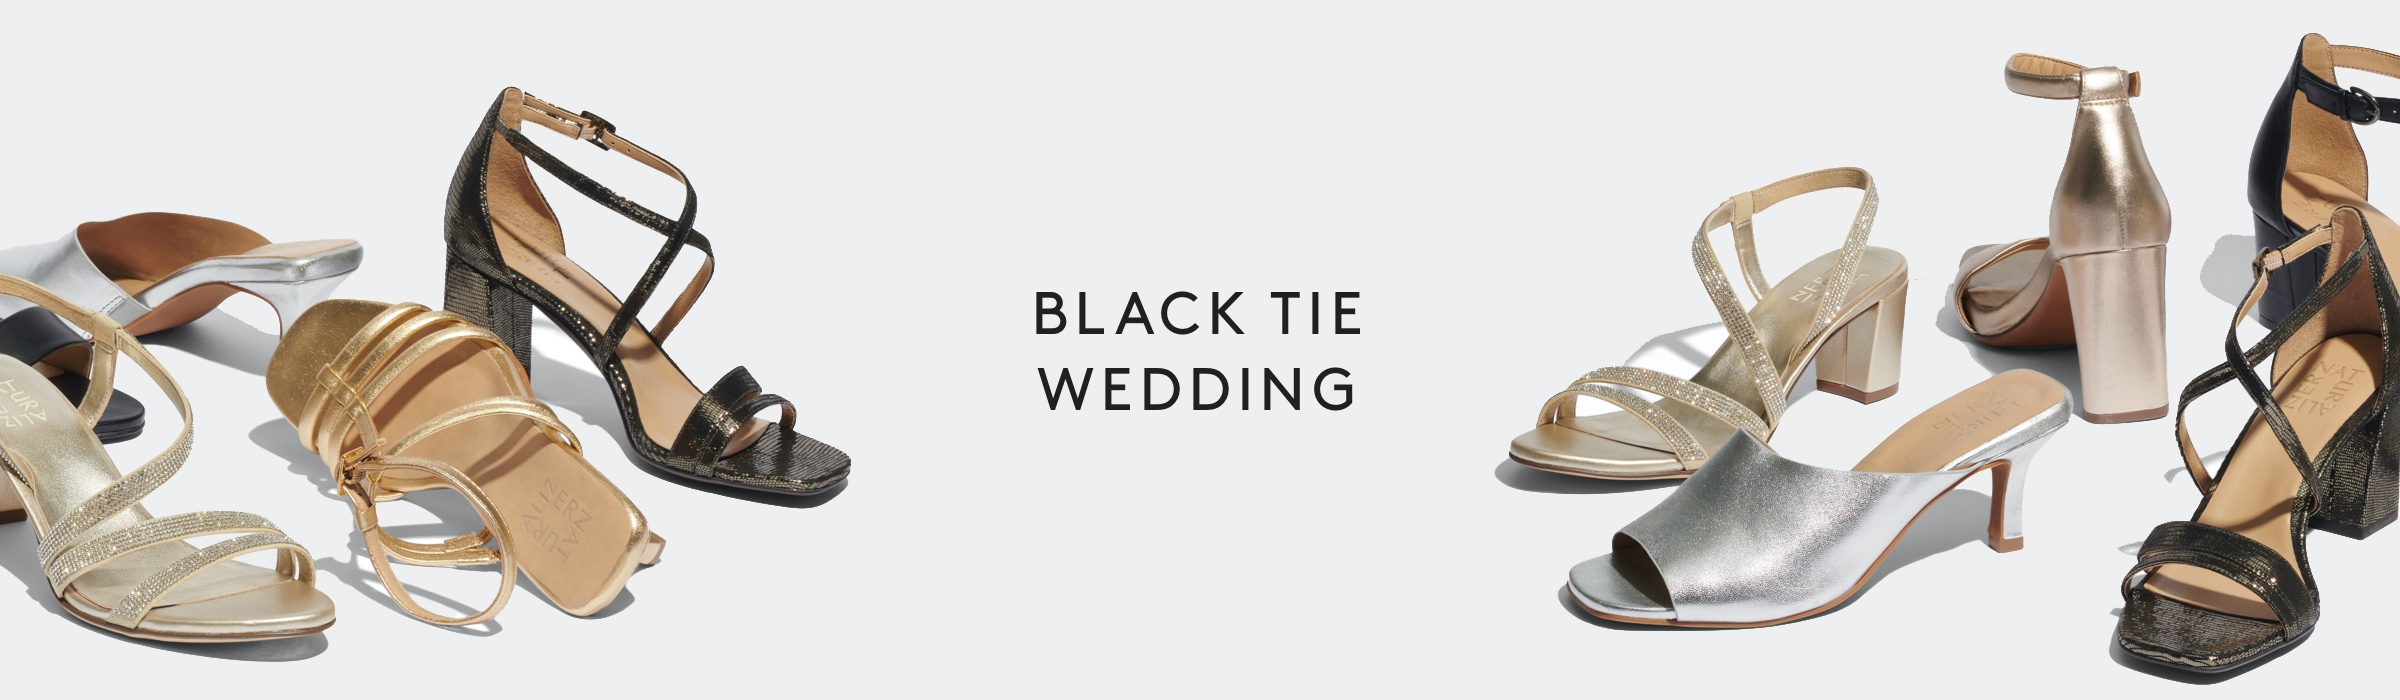 Black Tie Wedding Shoes